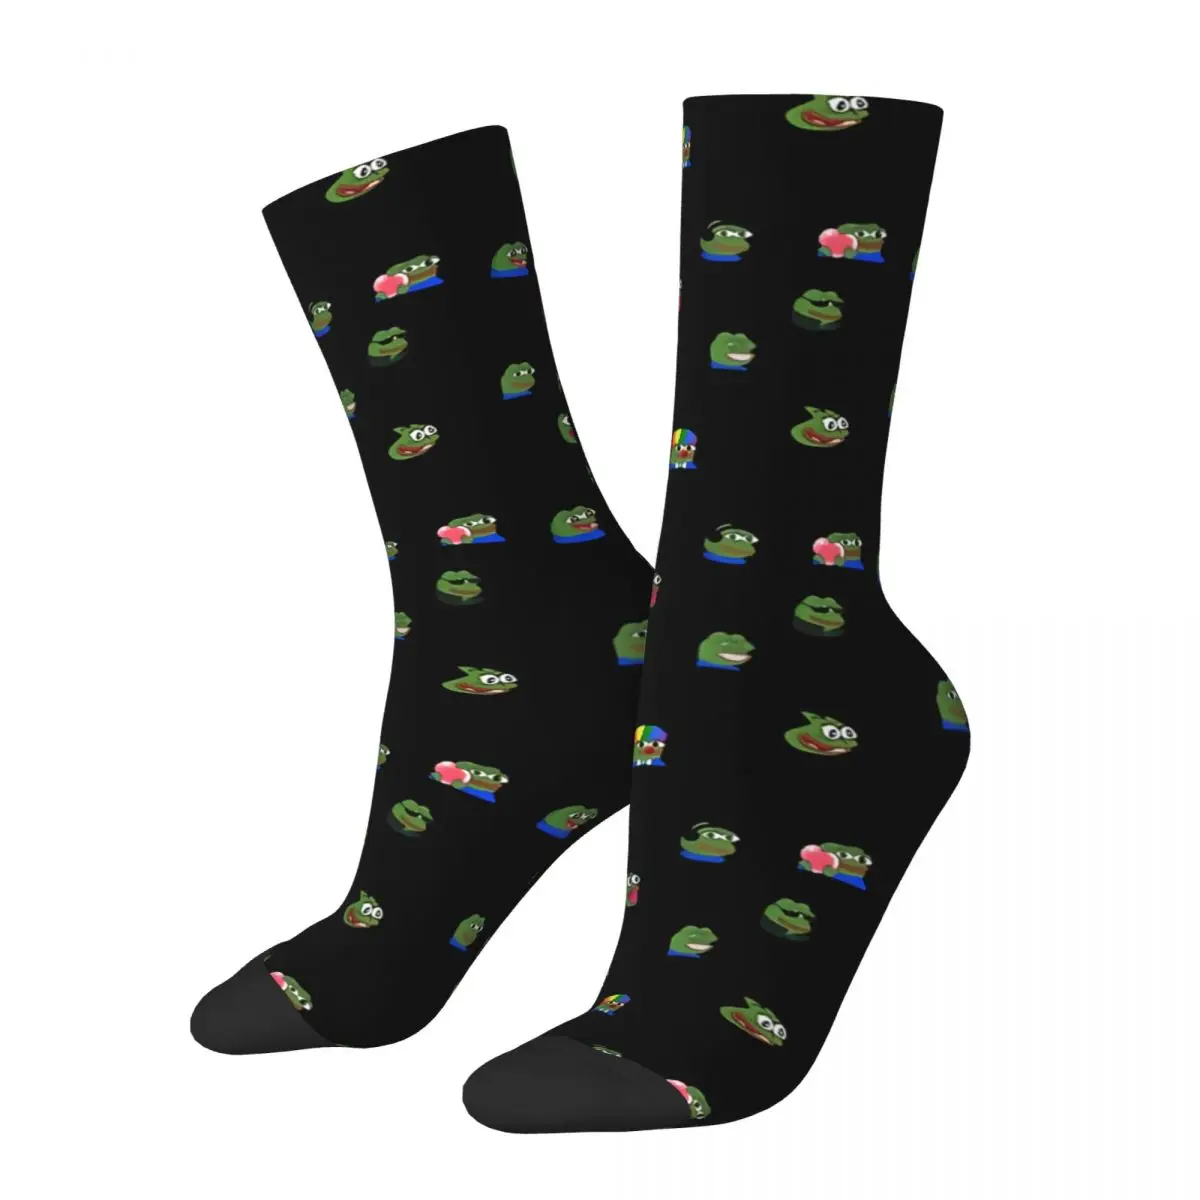 

Funny Crazy Sock for Men Peepo Emote Hip Hop Harajuku Pepe The Frog Happy Quality Pattern Printed Boys Crew Sock Novelty Gift